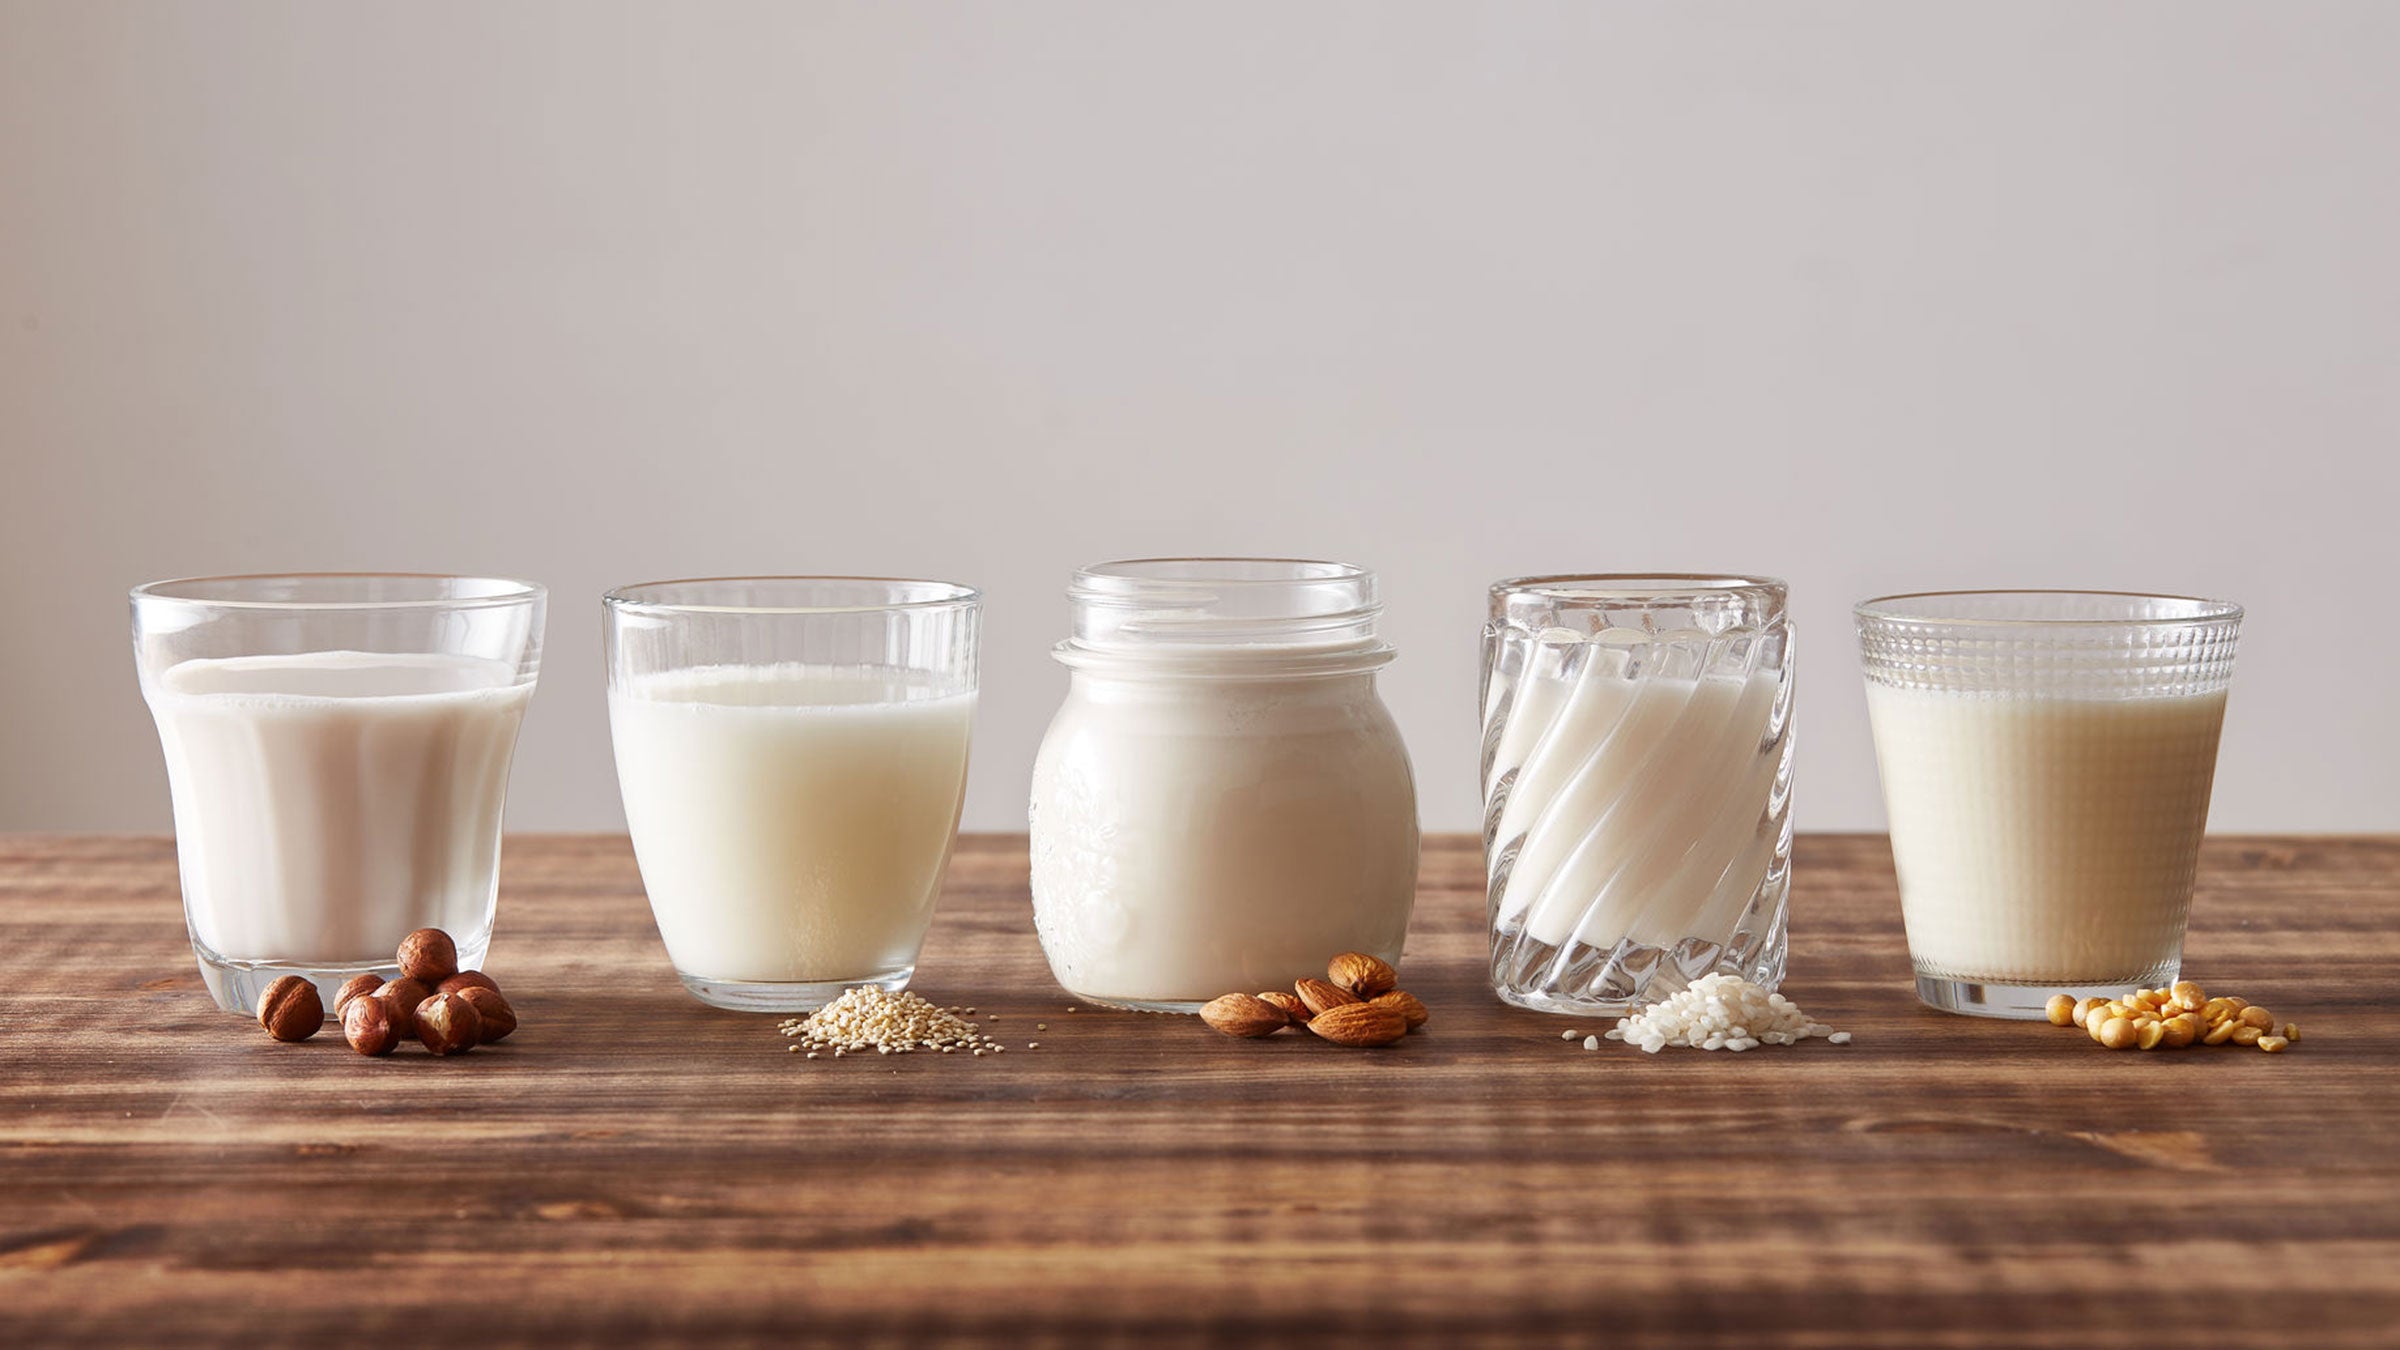 Pocket-friendly milk items